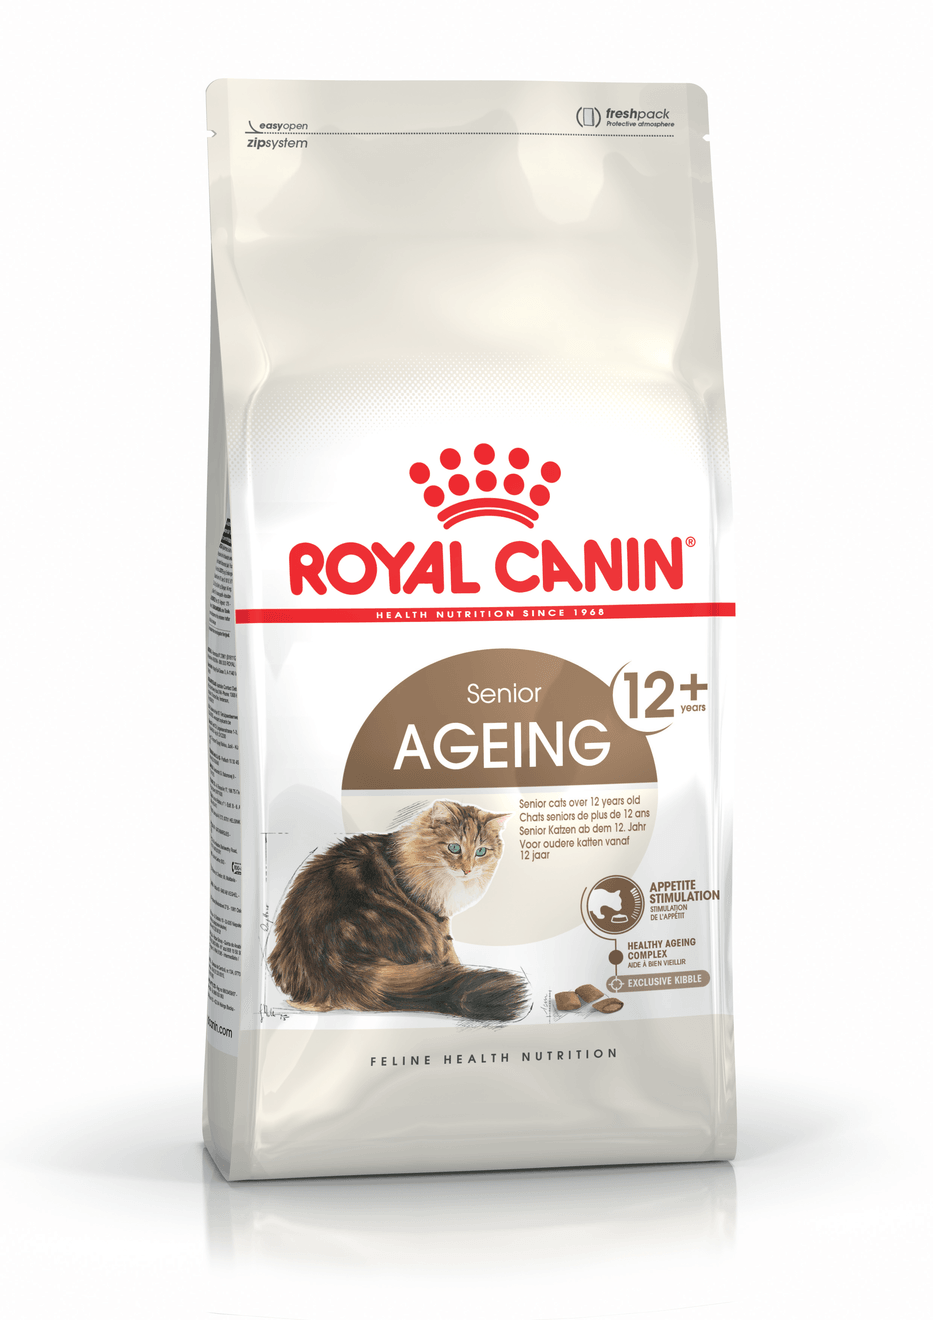 【Royal Canin】法國皇家貓乾糧 - 老年貓12+營養配方 - Pet Pet Plaza